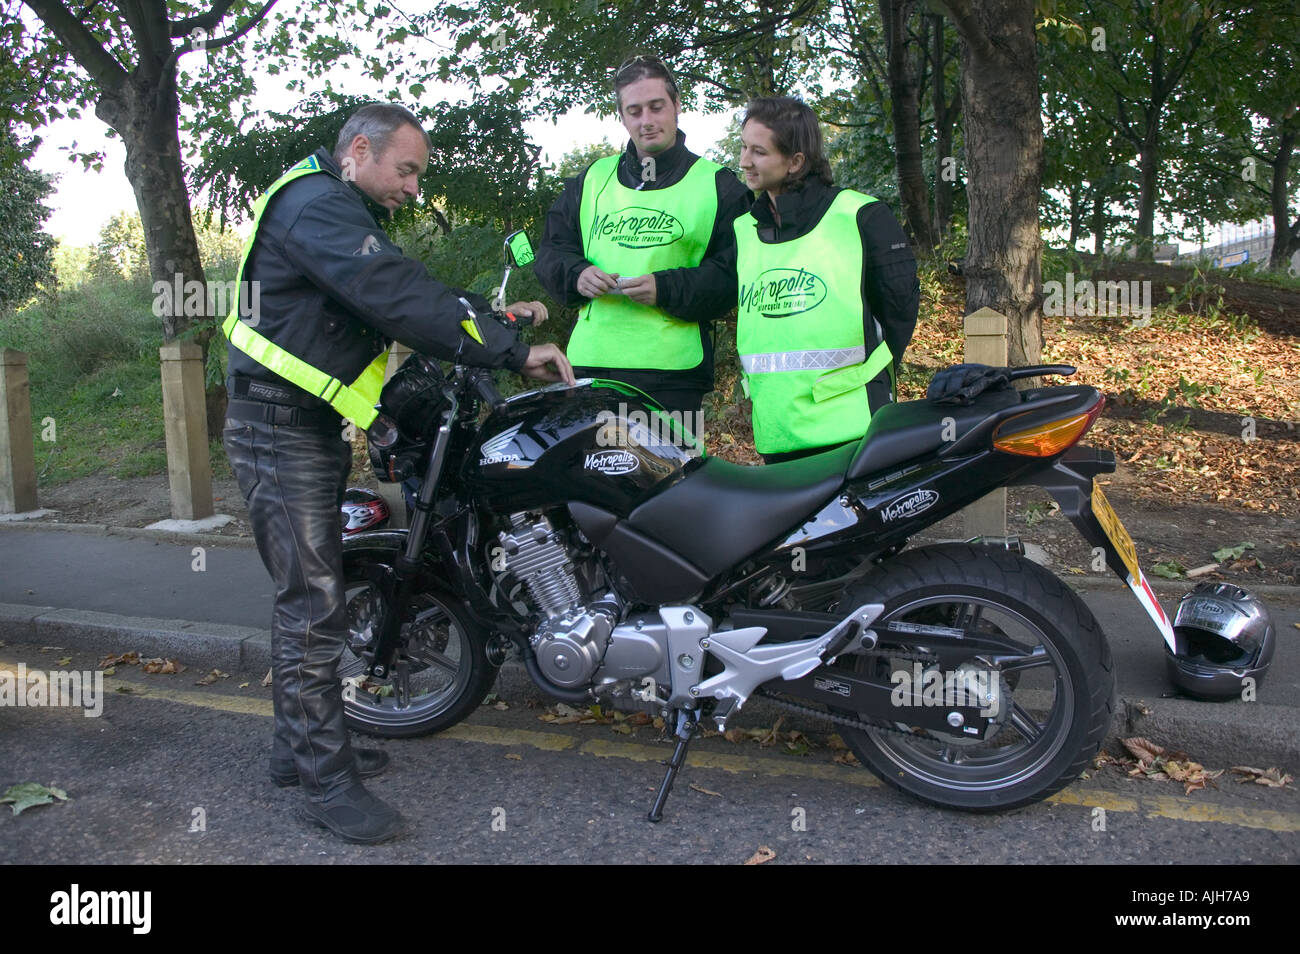 Motorbike learners take lessons at Metropolis bike training school Vauxhall south London England United Kingdom Stock Photo